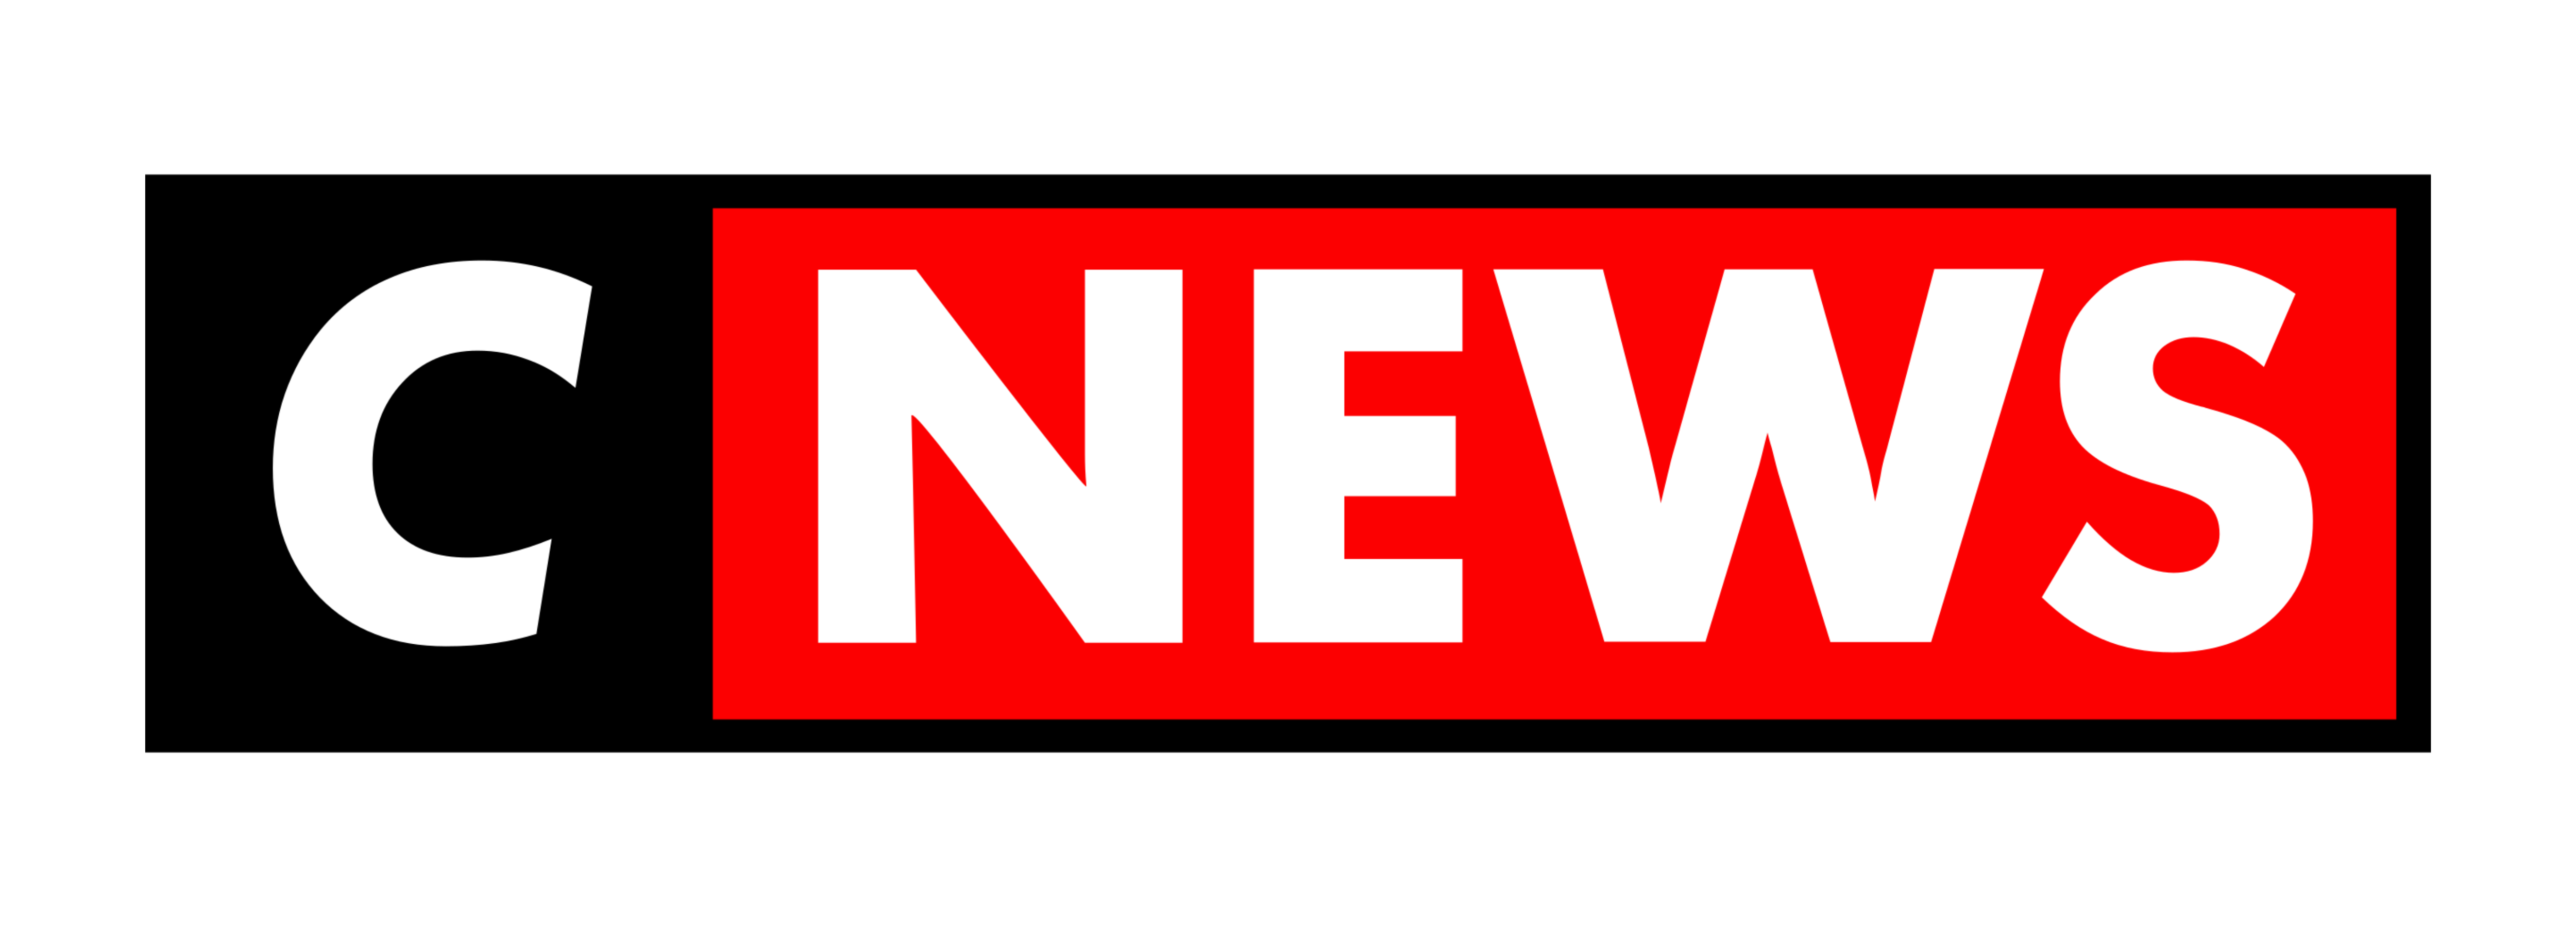 logotipo de cnews media